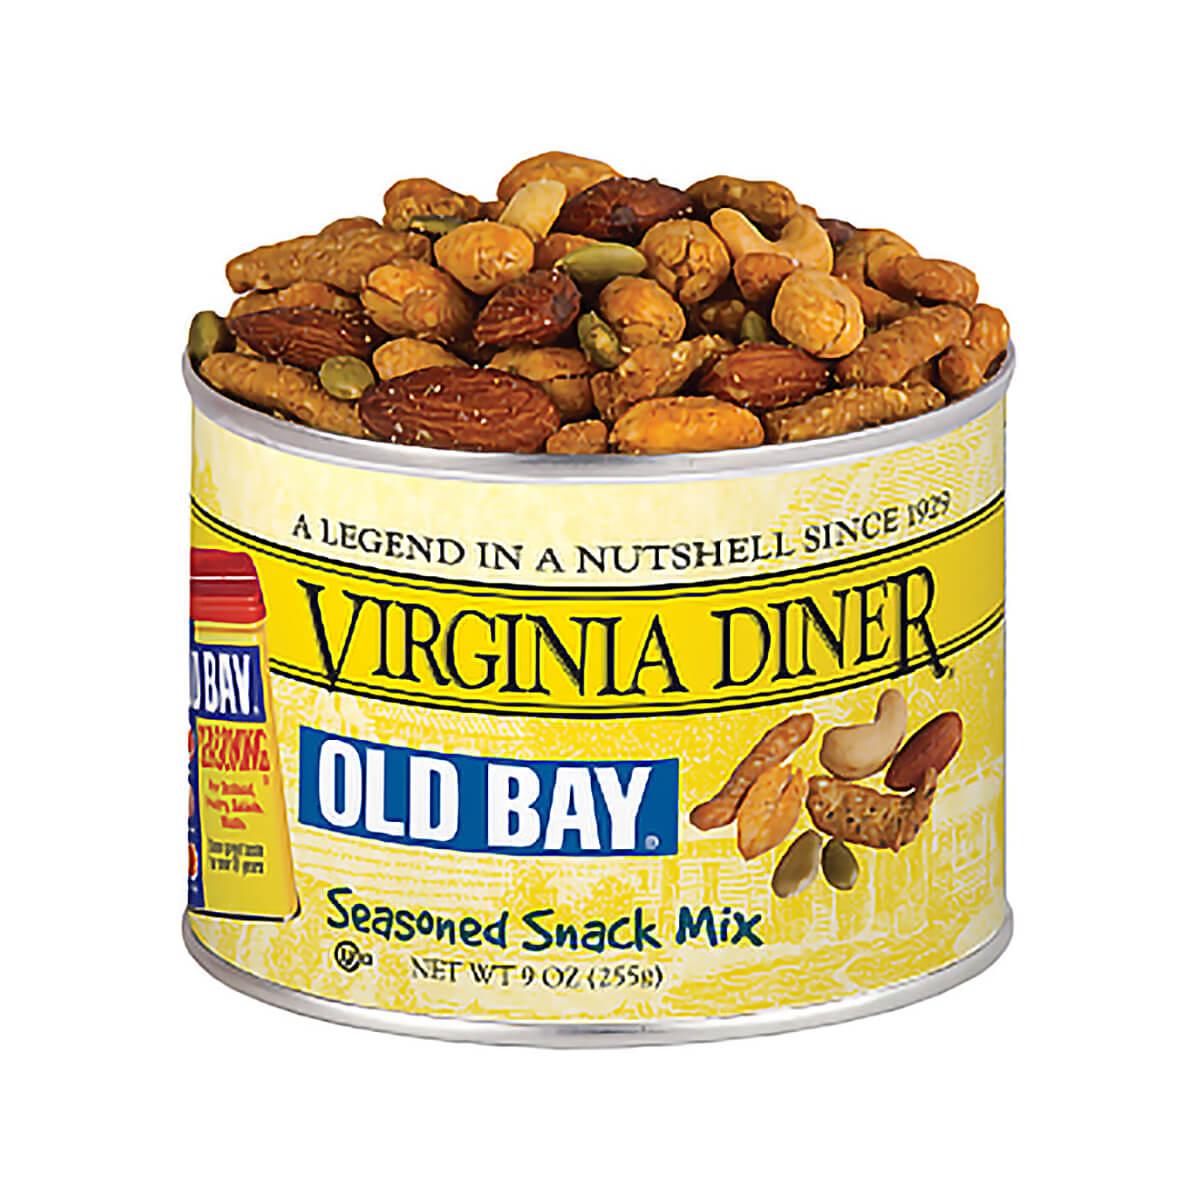  Old Bay Seasoned Snack Mix 9oz